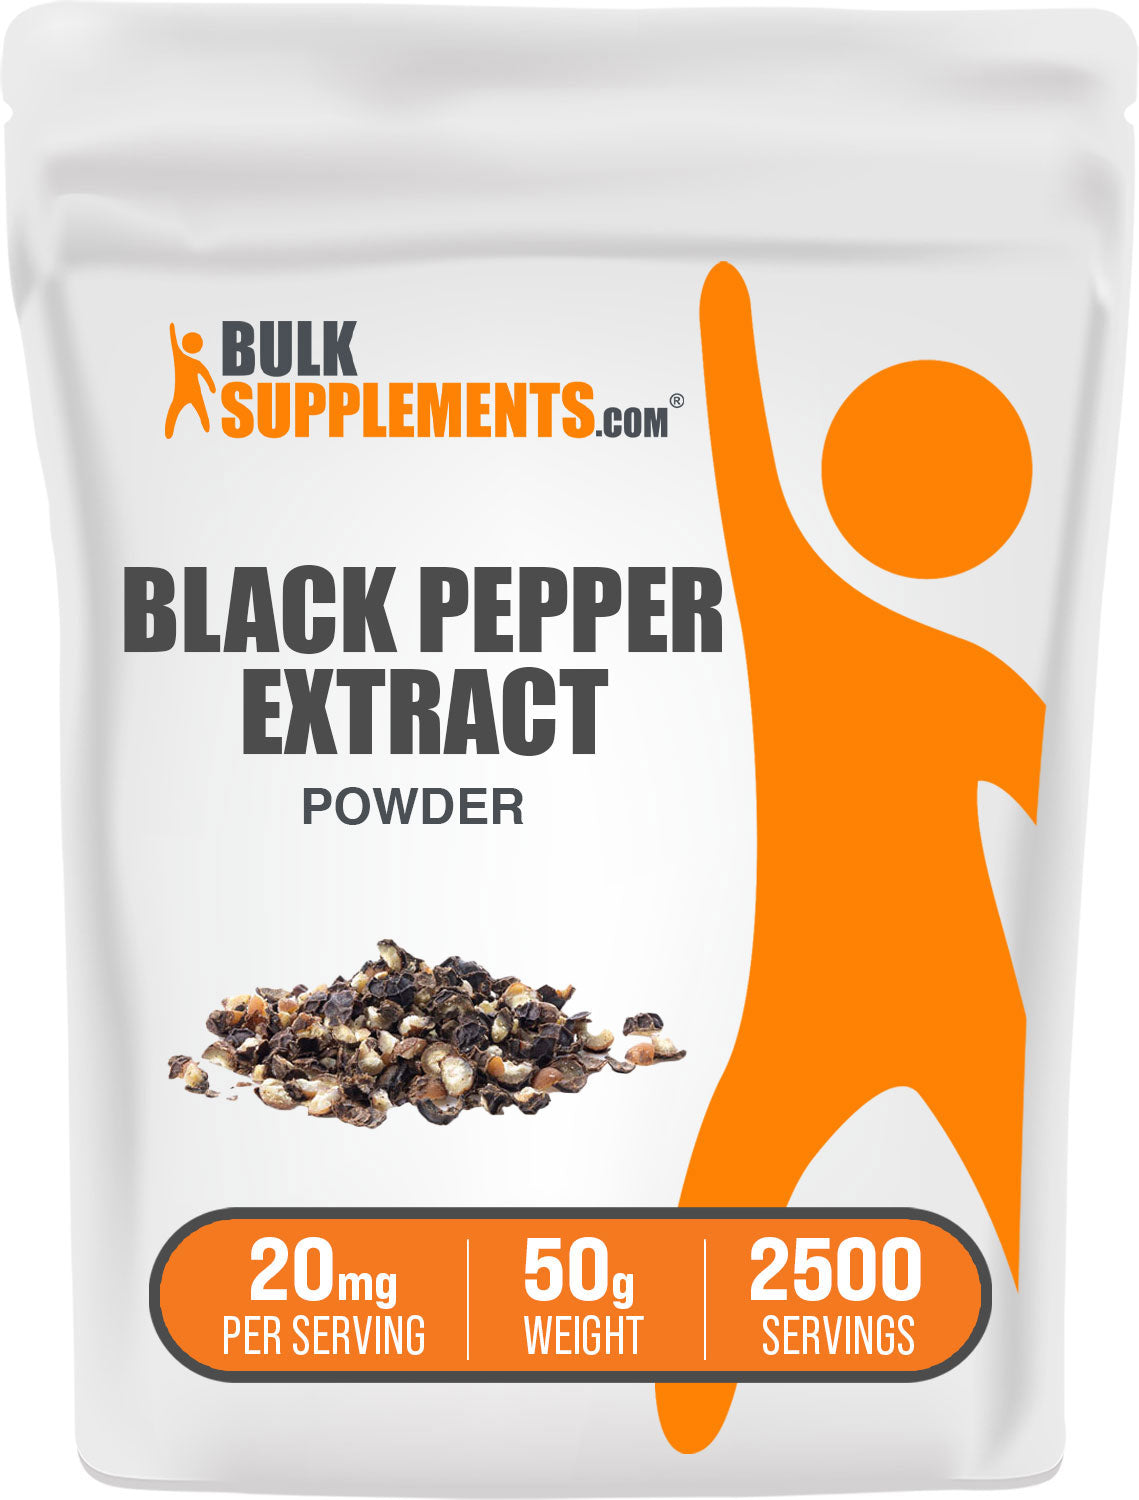 BulkSupplements.com Black Pepper Extract Powder 50g Bag